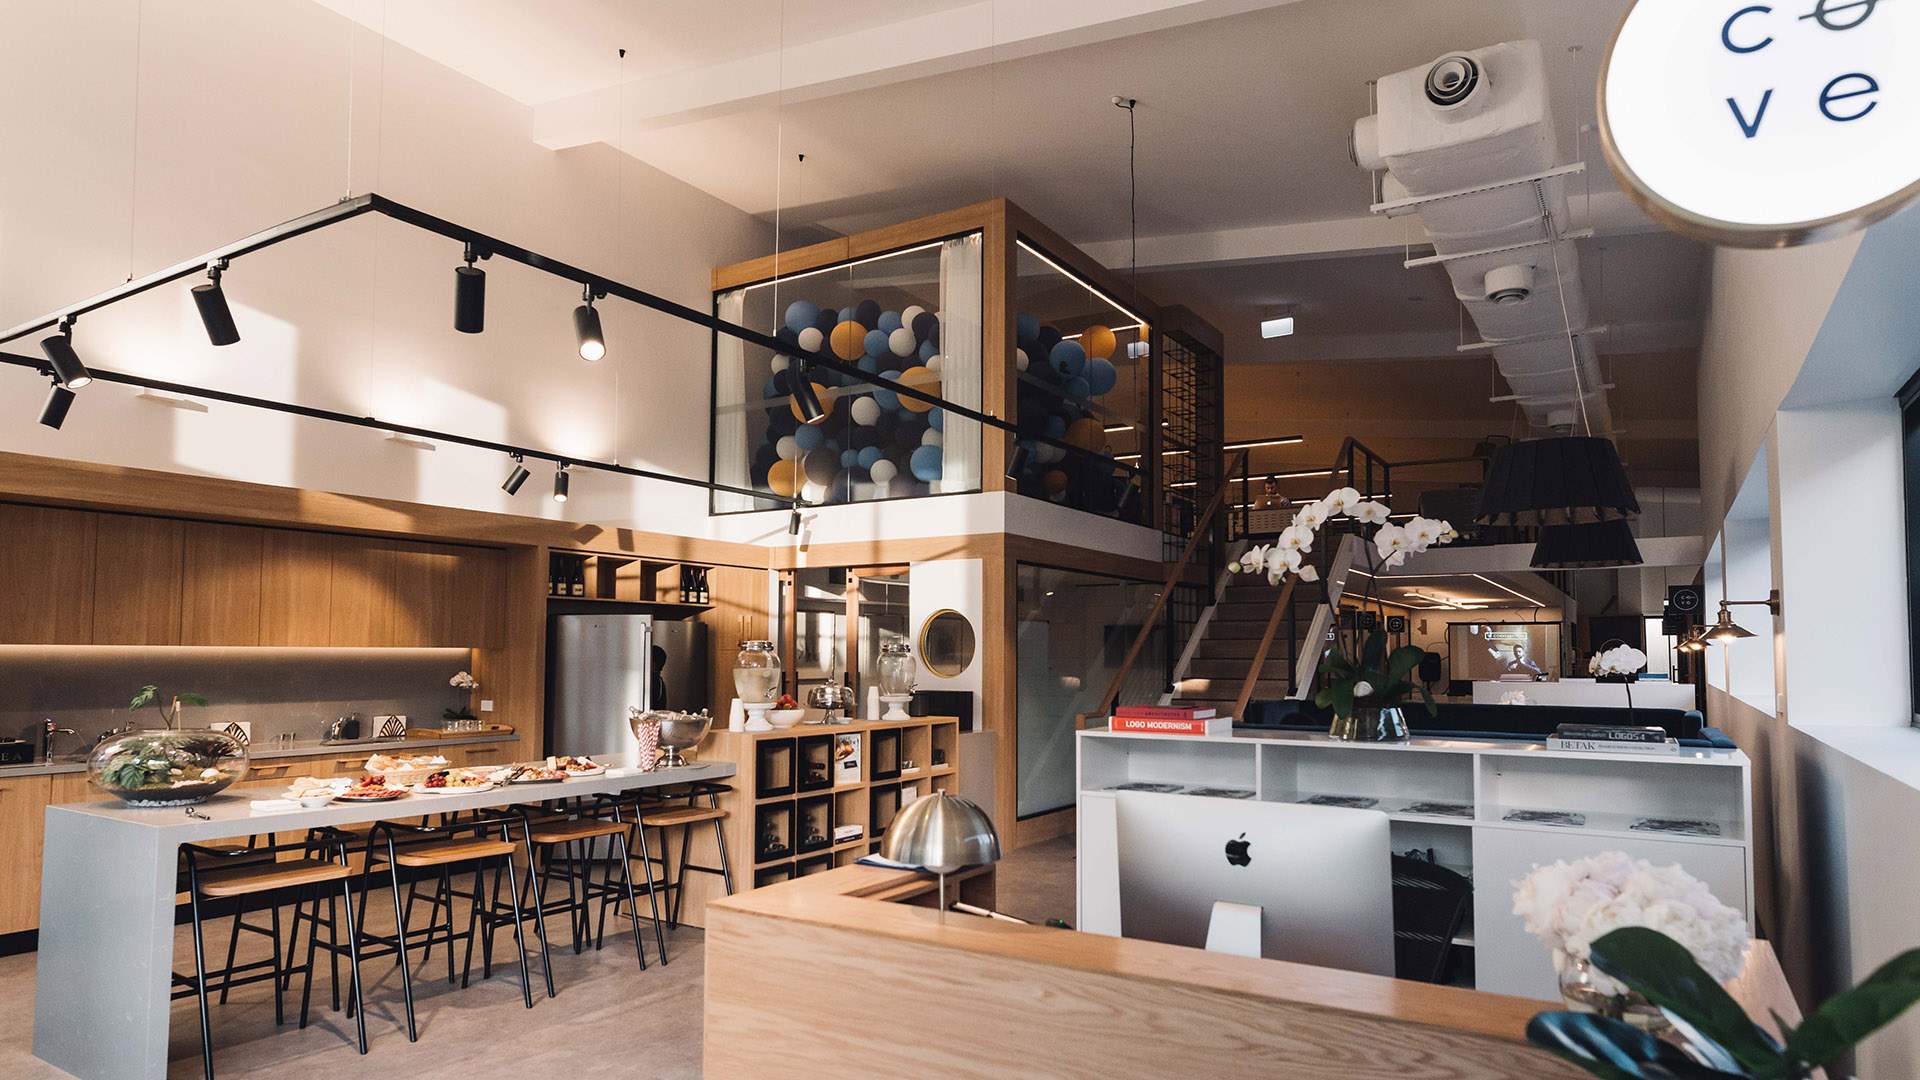 Meet Brisbane's New Beautifully Designed Creative Co-Working Hub, The Cove